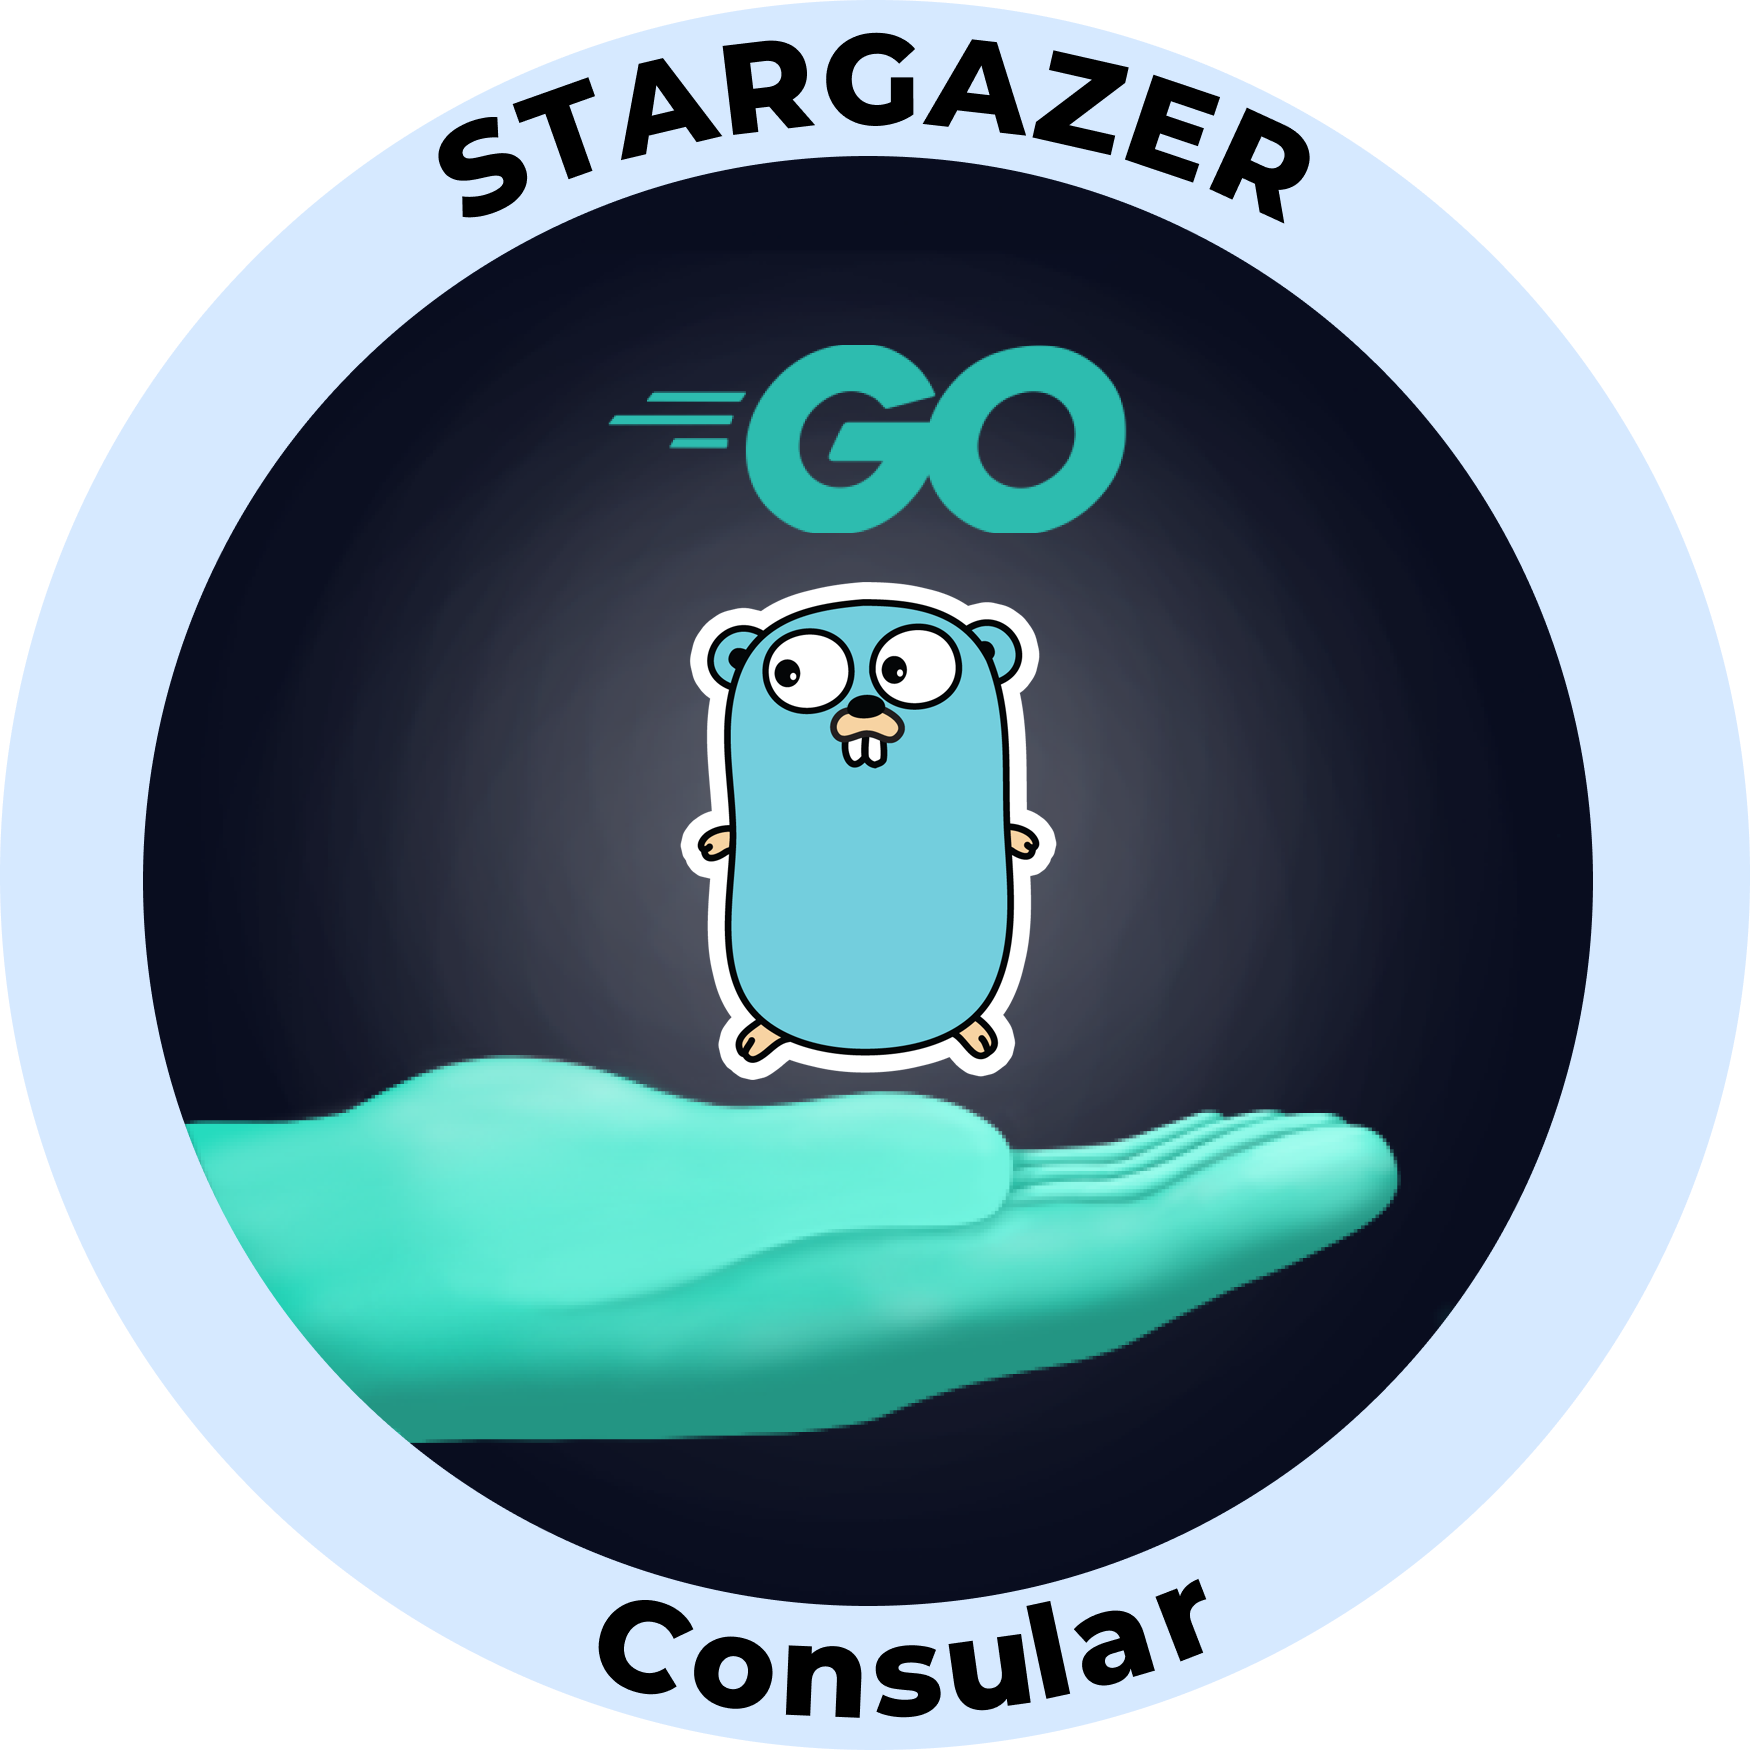 Web3 Badge | Stargazer: Go Consular